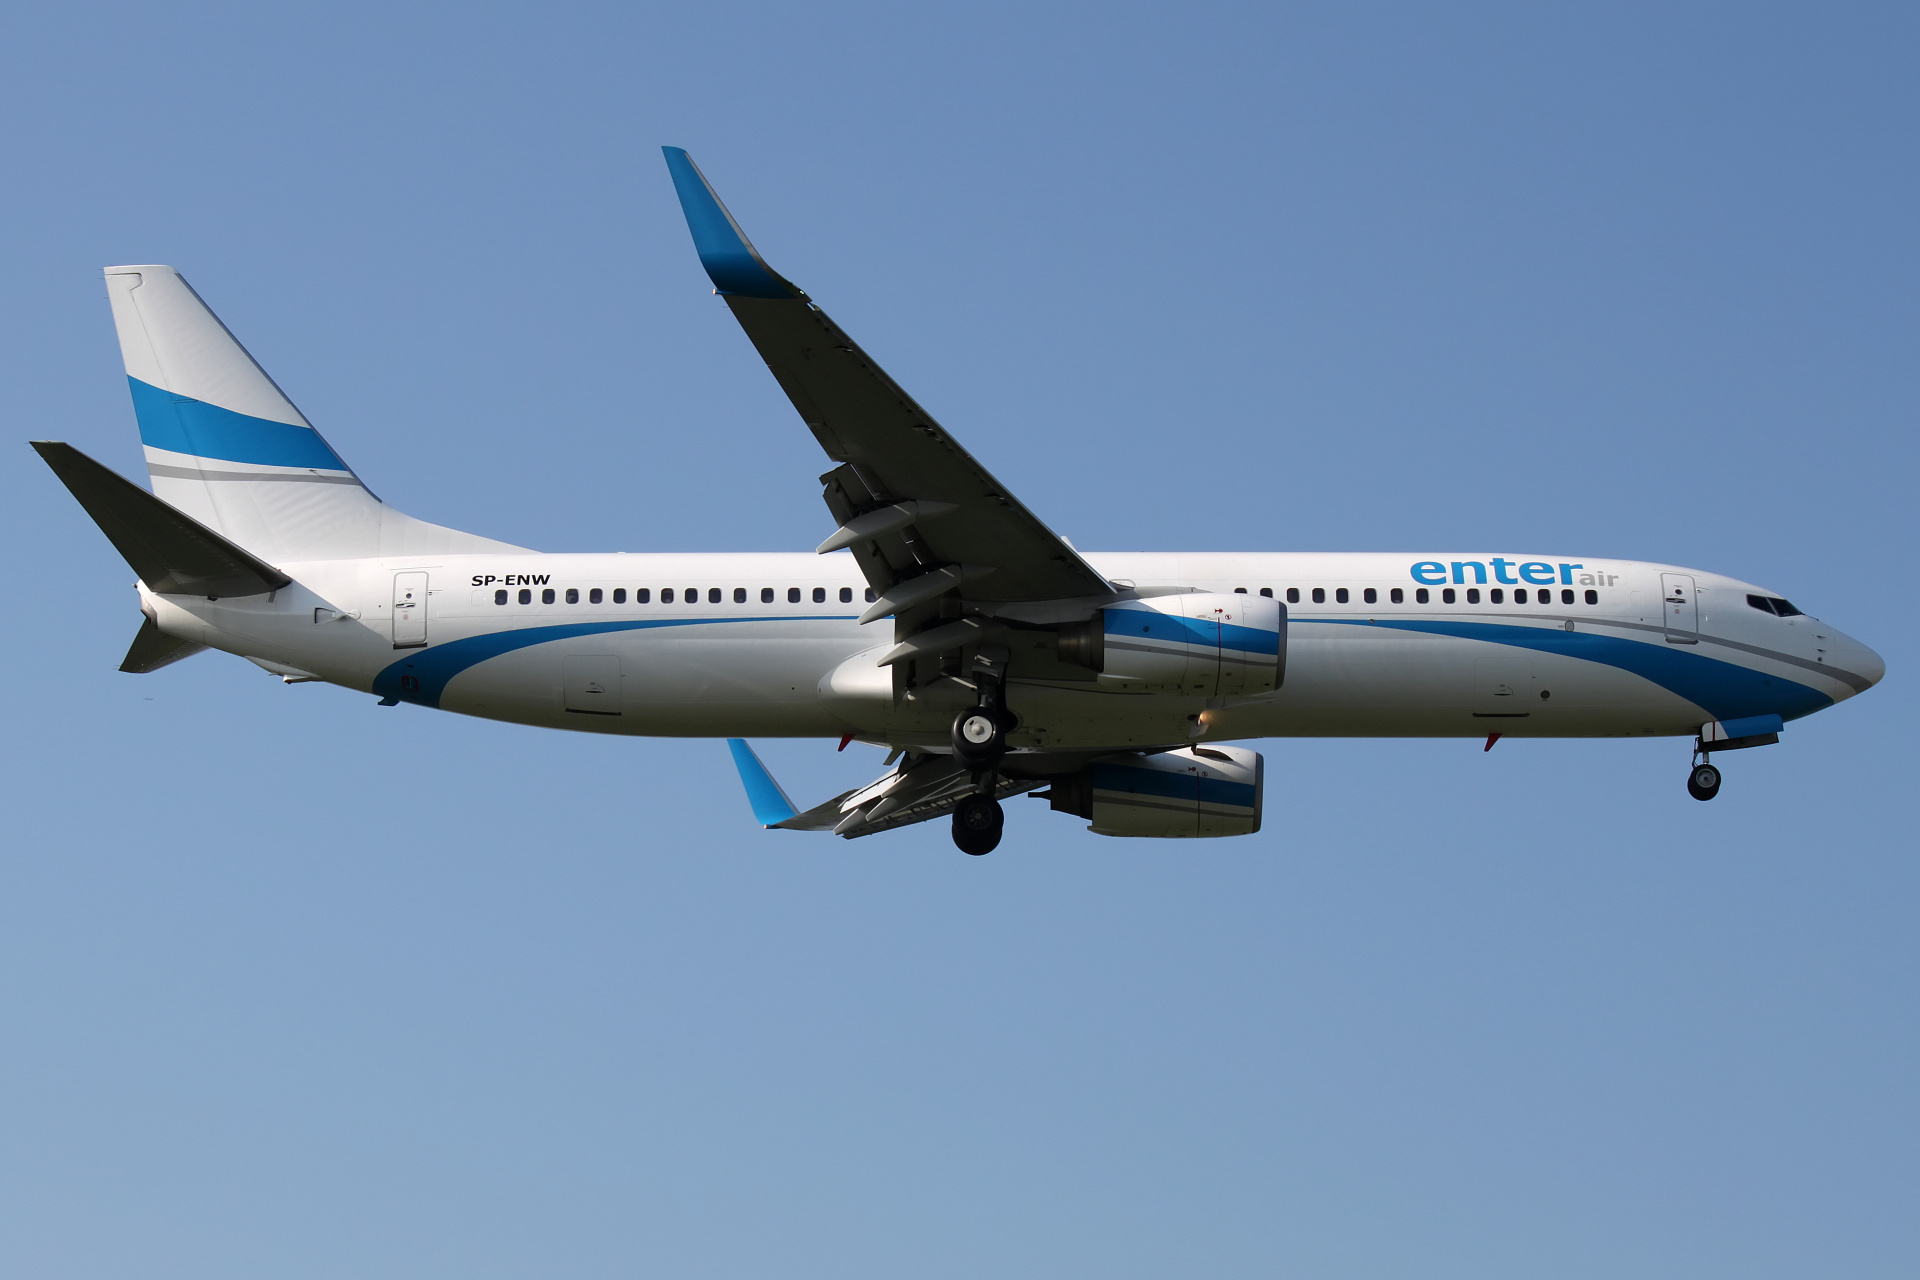 SP-ENW (Aircraft » EPWA Spotting » Boeing 737-800 » Enter Air)